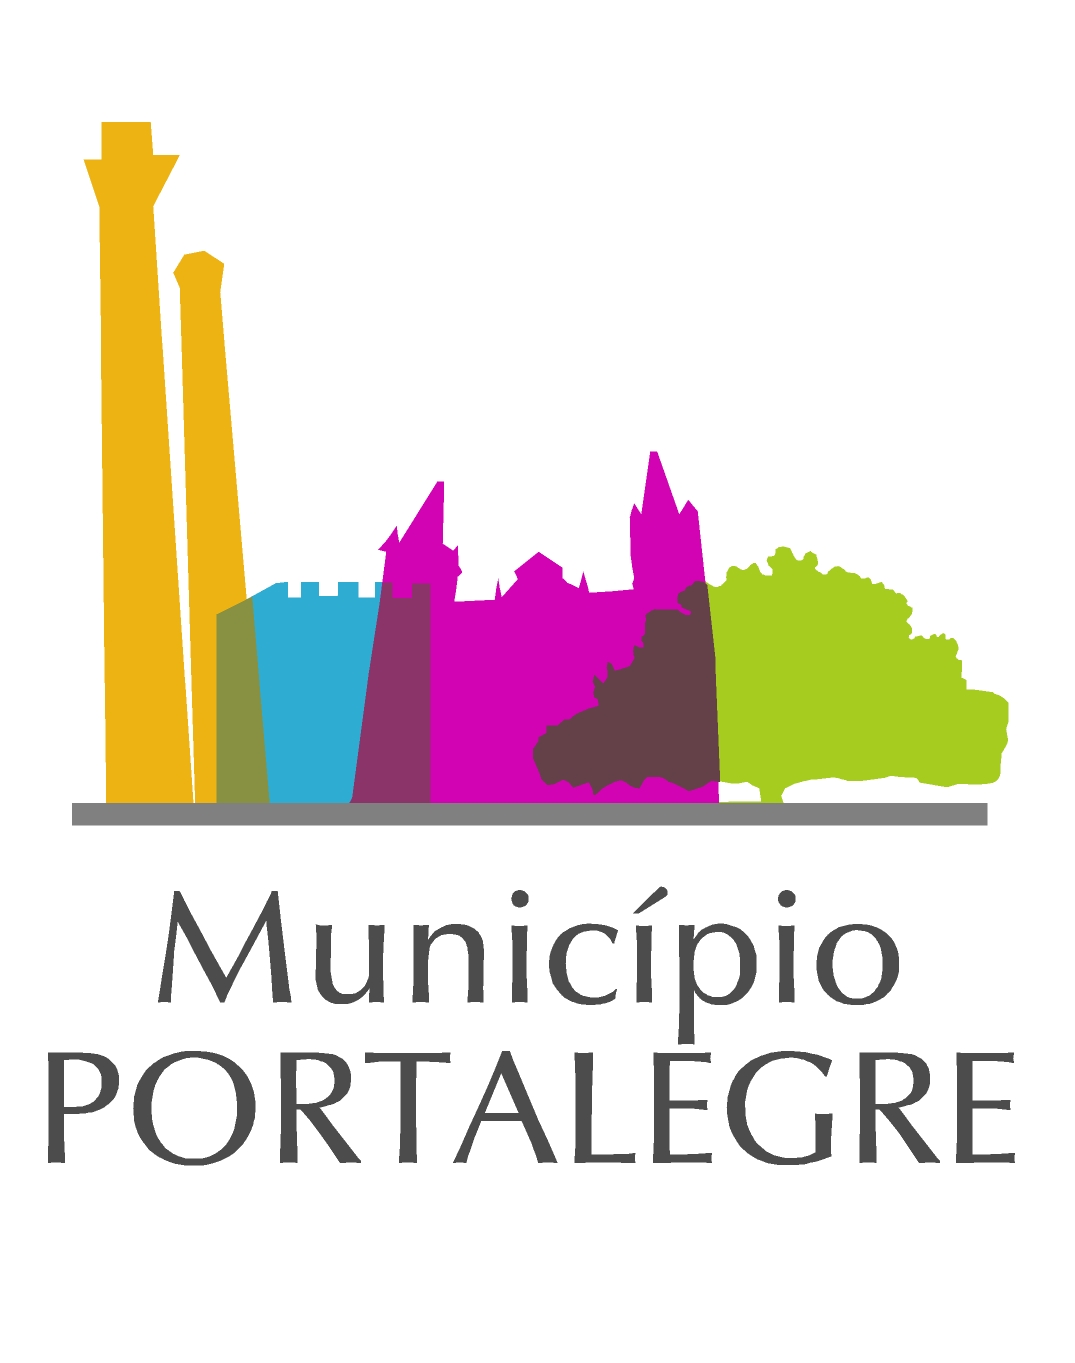 PortalegreMunicipio